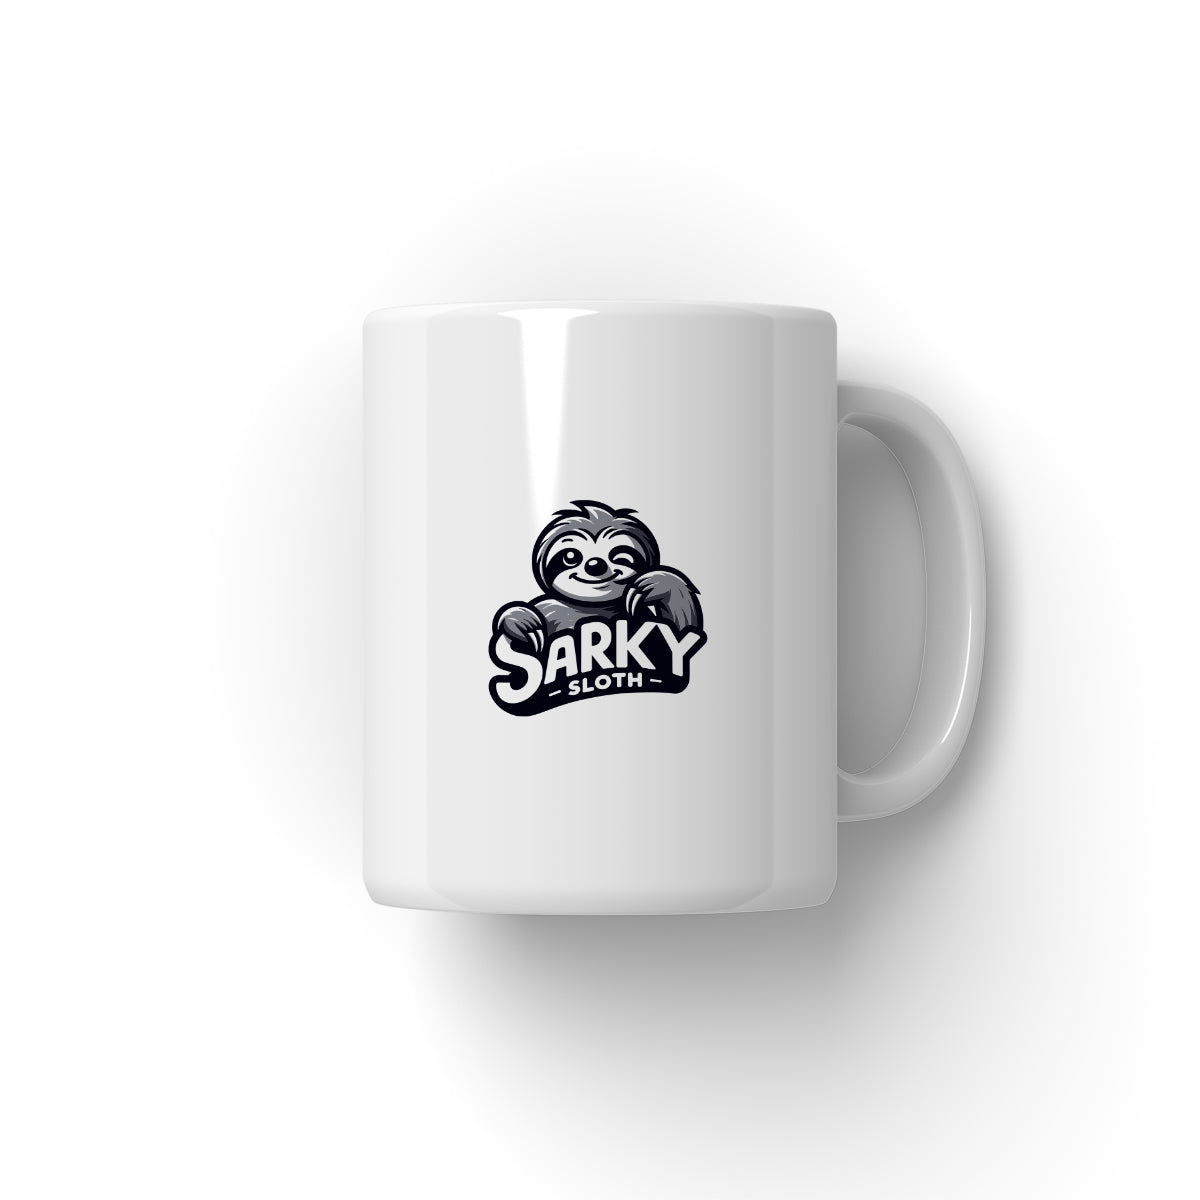 sarky sloth, funny shaped mugs, funny best friend mugs, fathers day funny mugs, funny shaped coffee mugs, cat mug funny